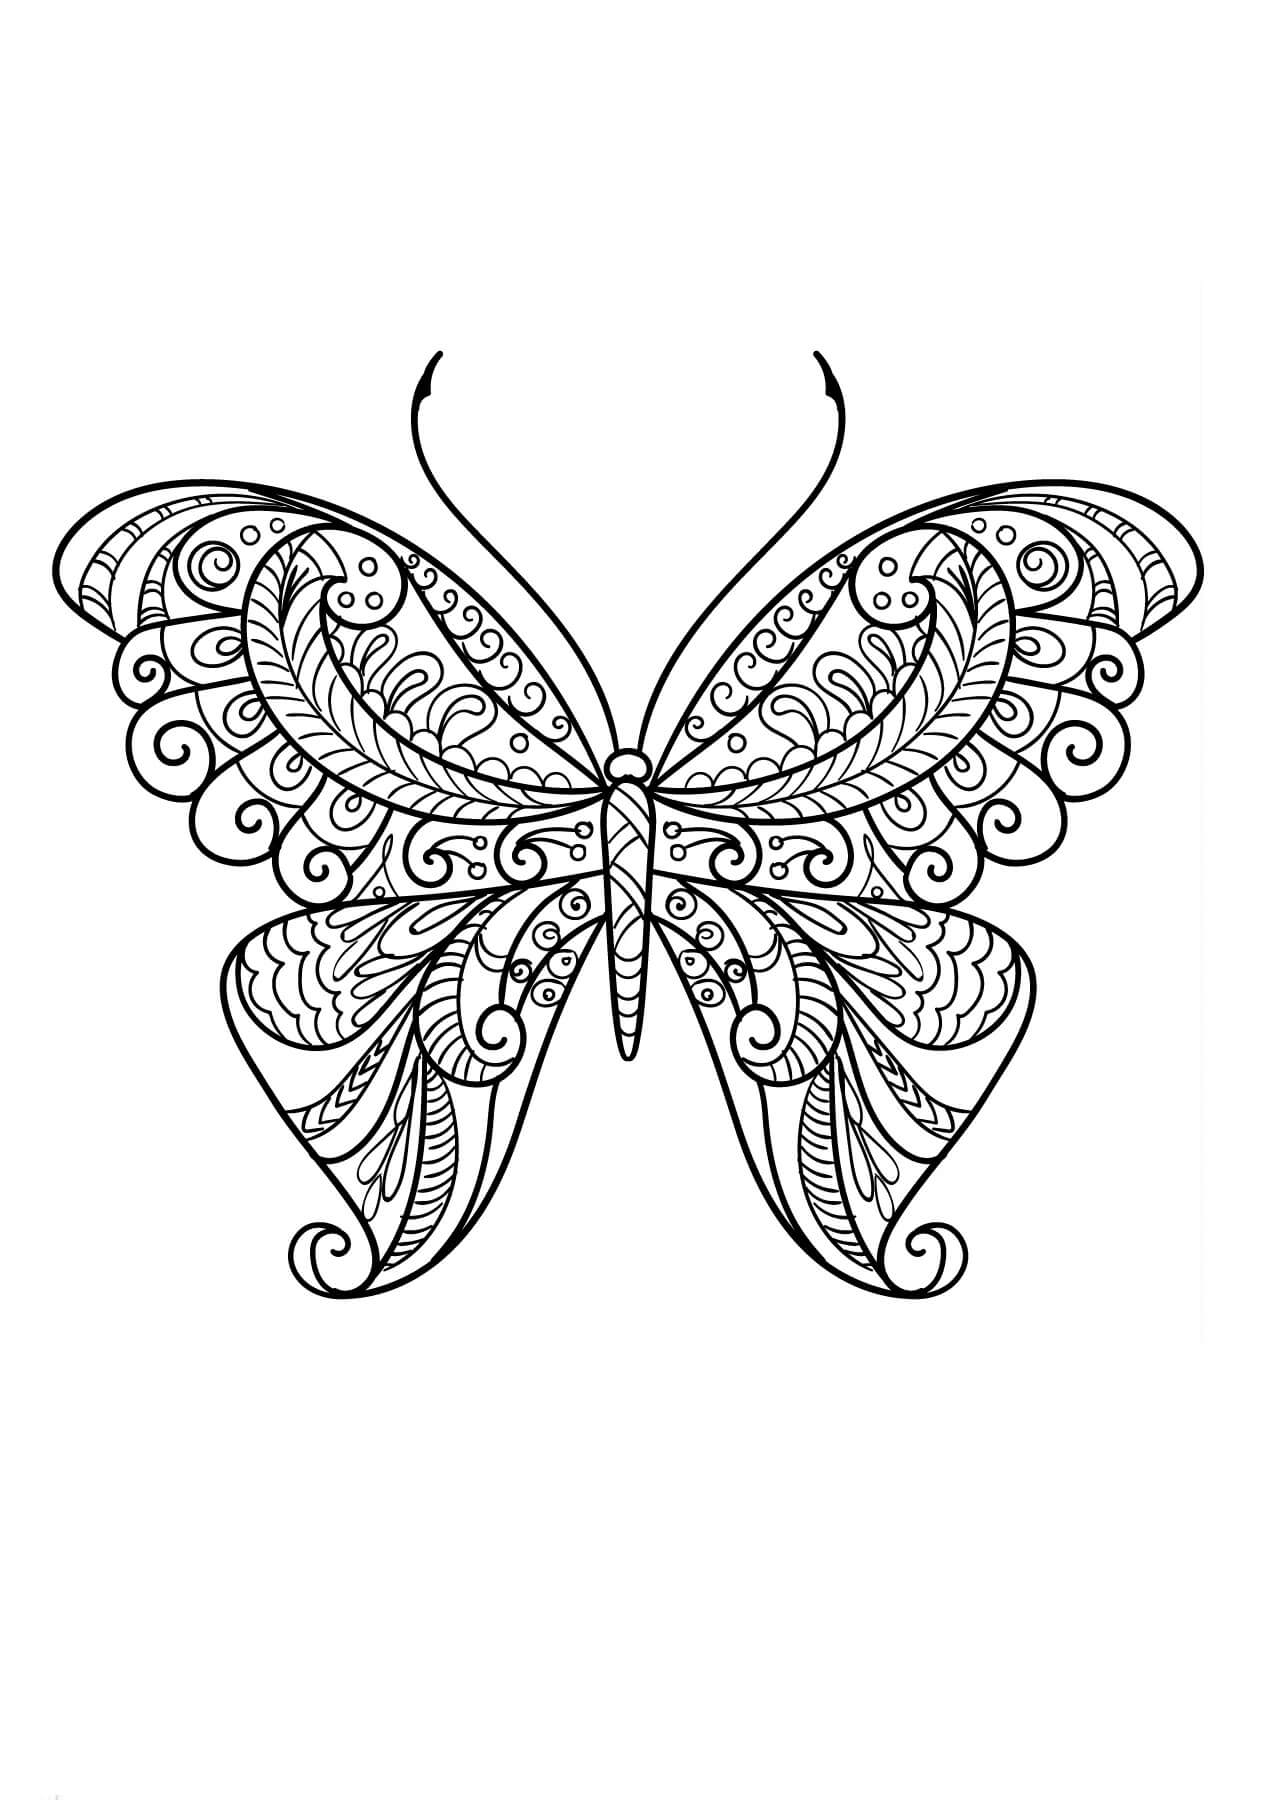 Mandala Butterfly Coloring Page - Sheet 5 Mandalas